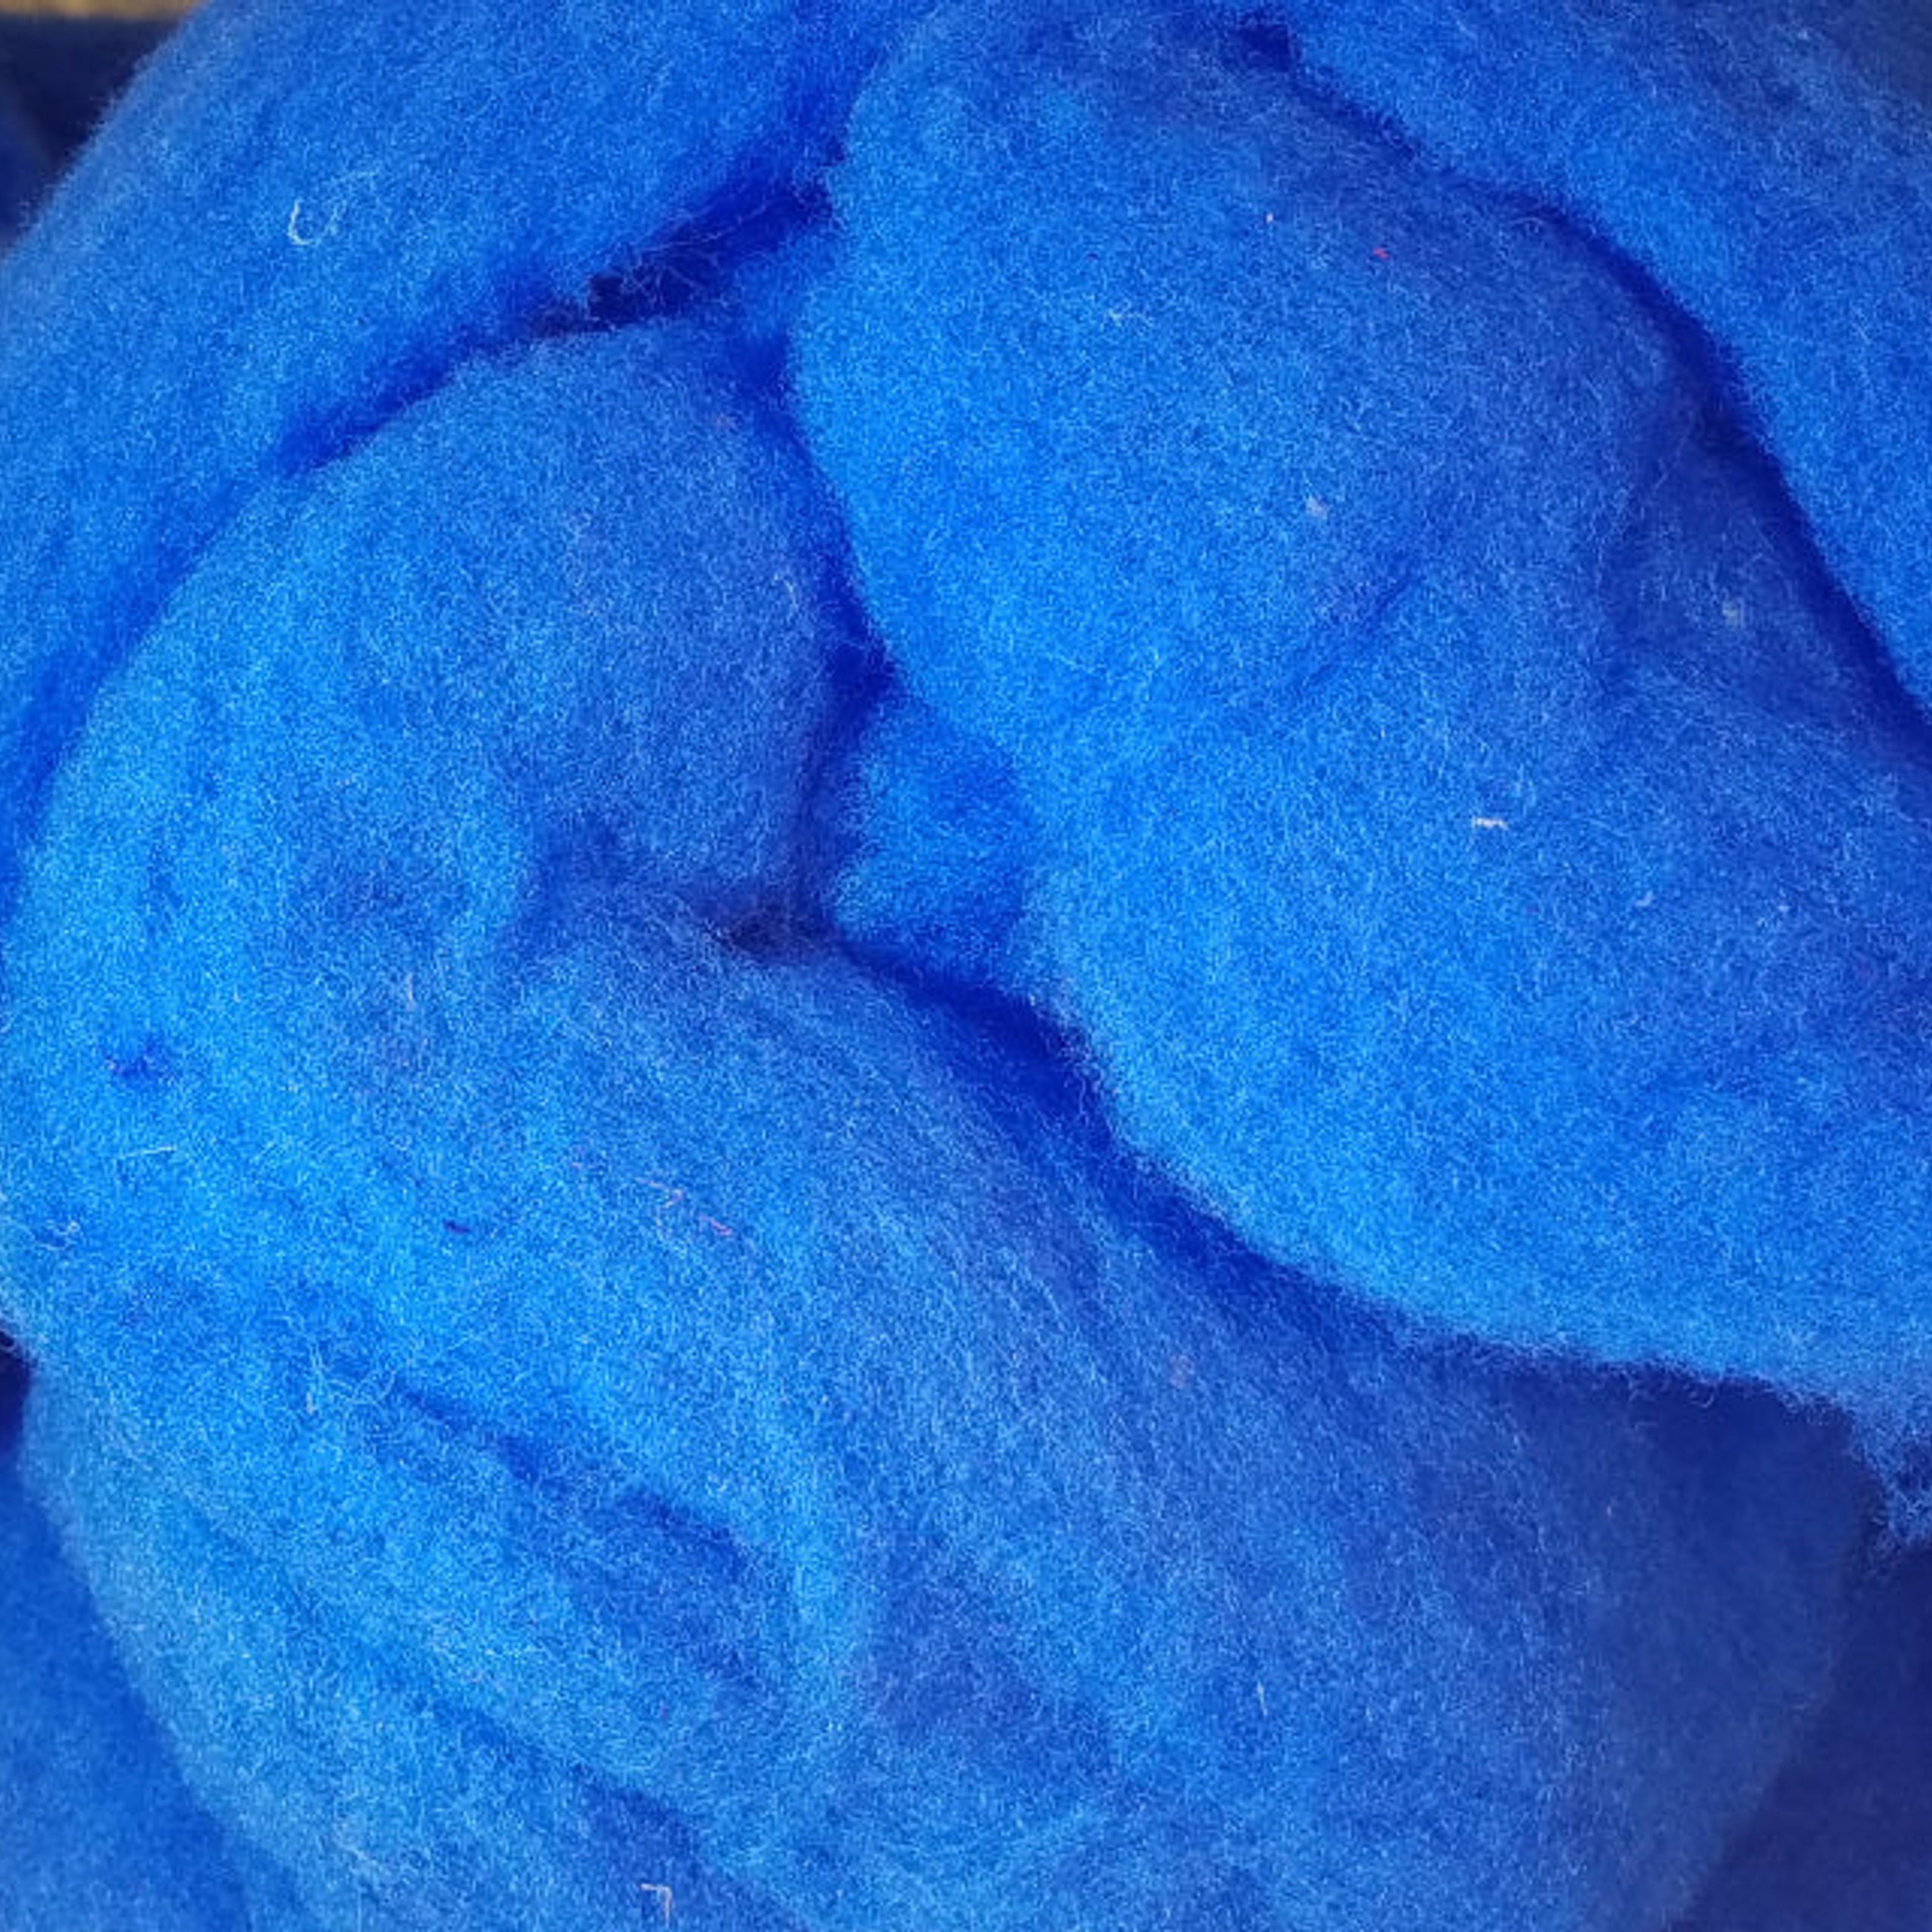 Blue Wool Roving